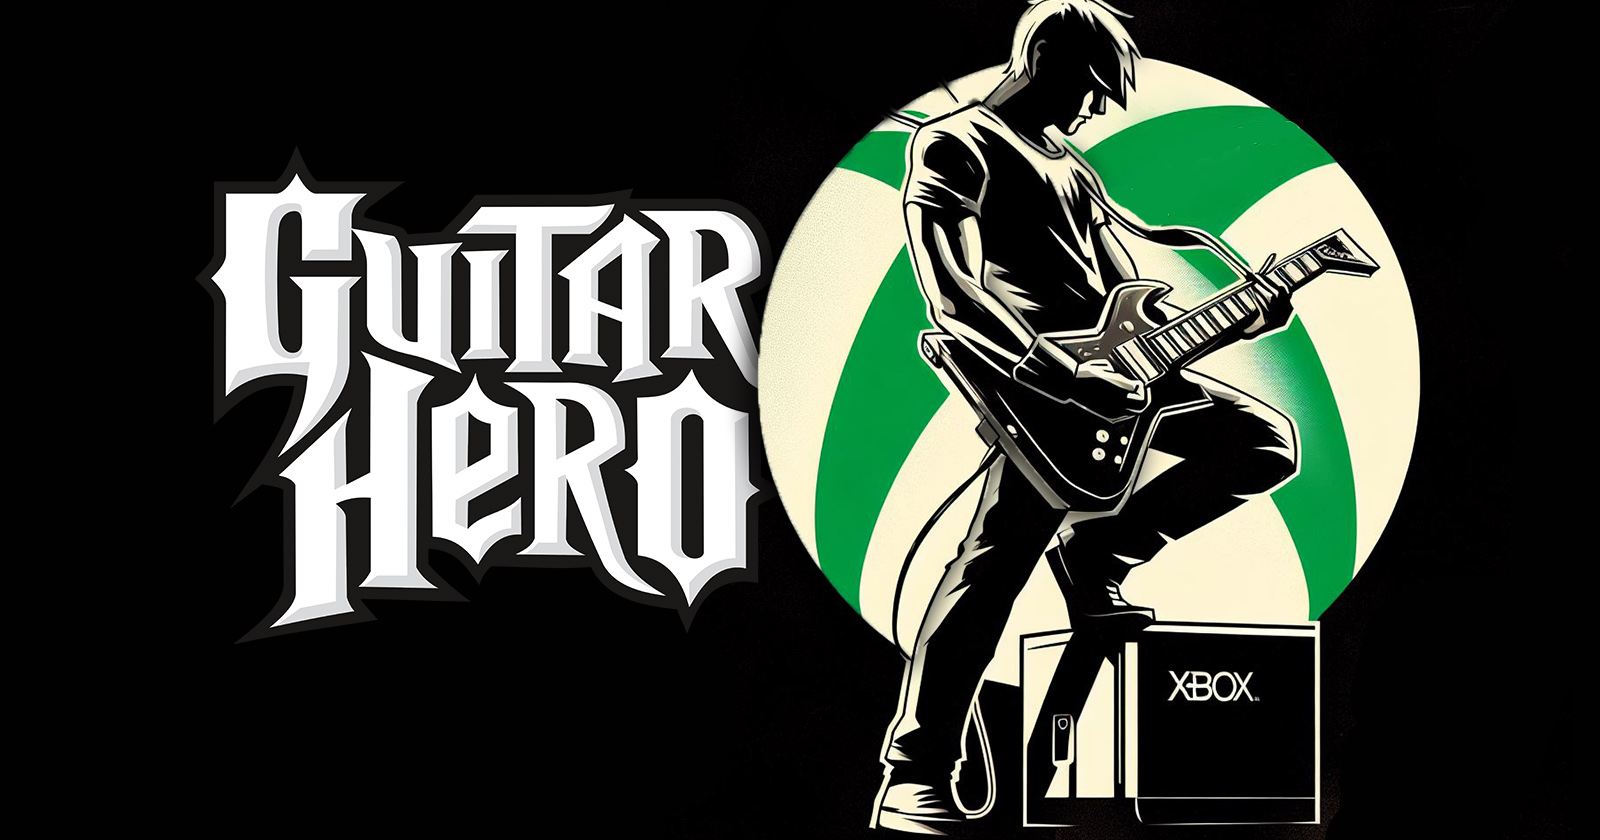 guitar hero xbox